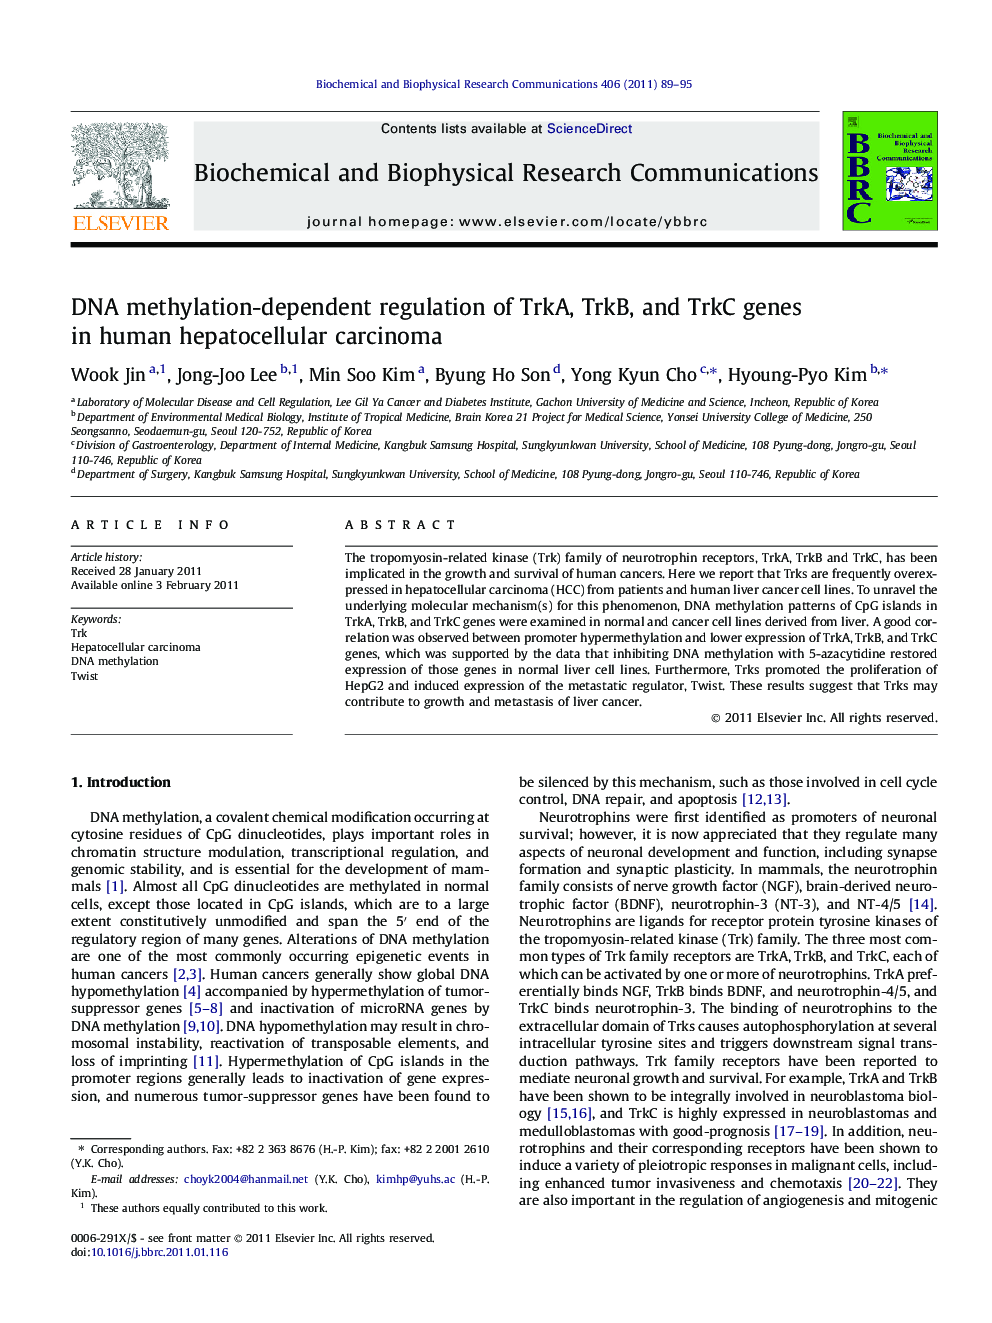 DNA methylation-dependent regulation of TrkA, TrkB, and TrkC genes in human hepatocellular carcinoma